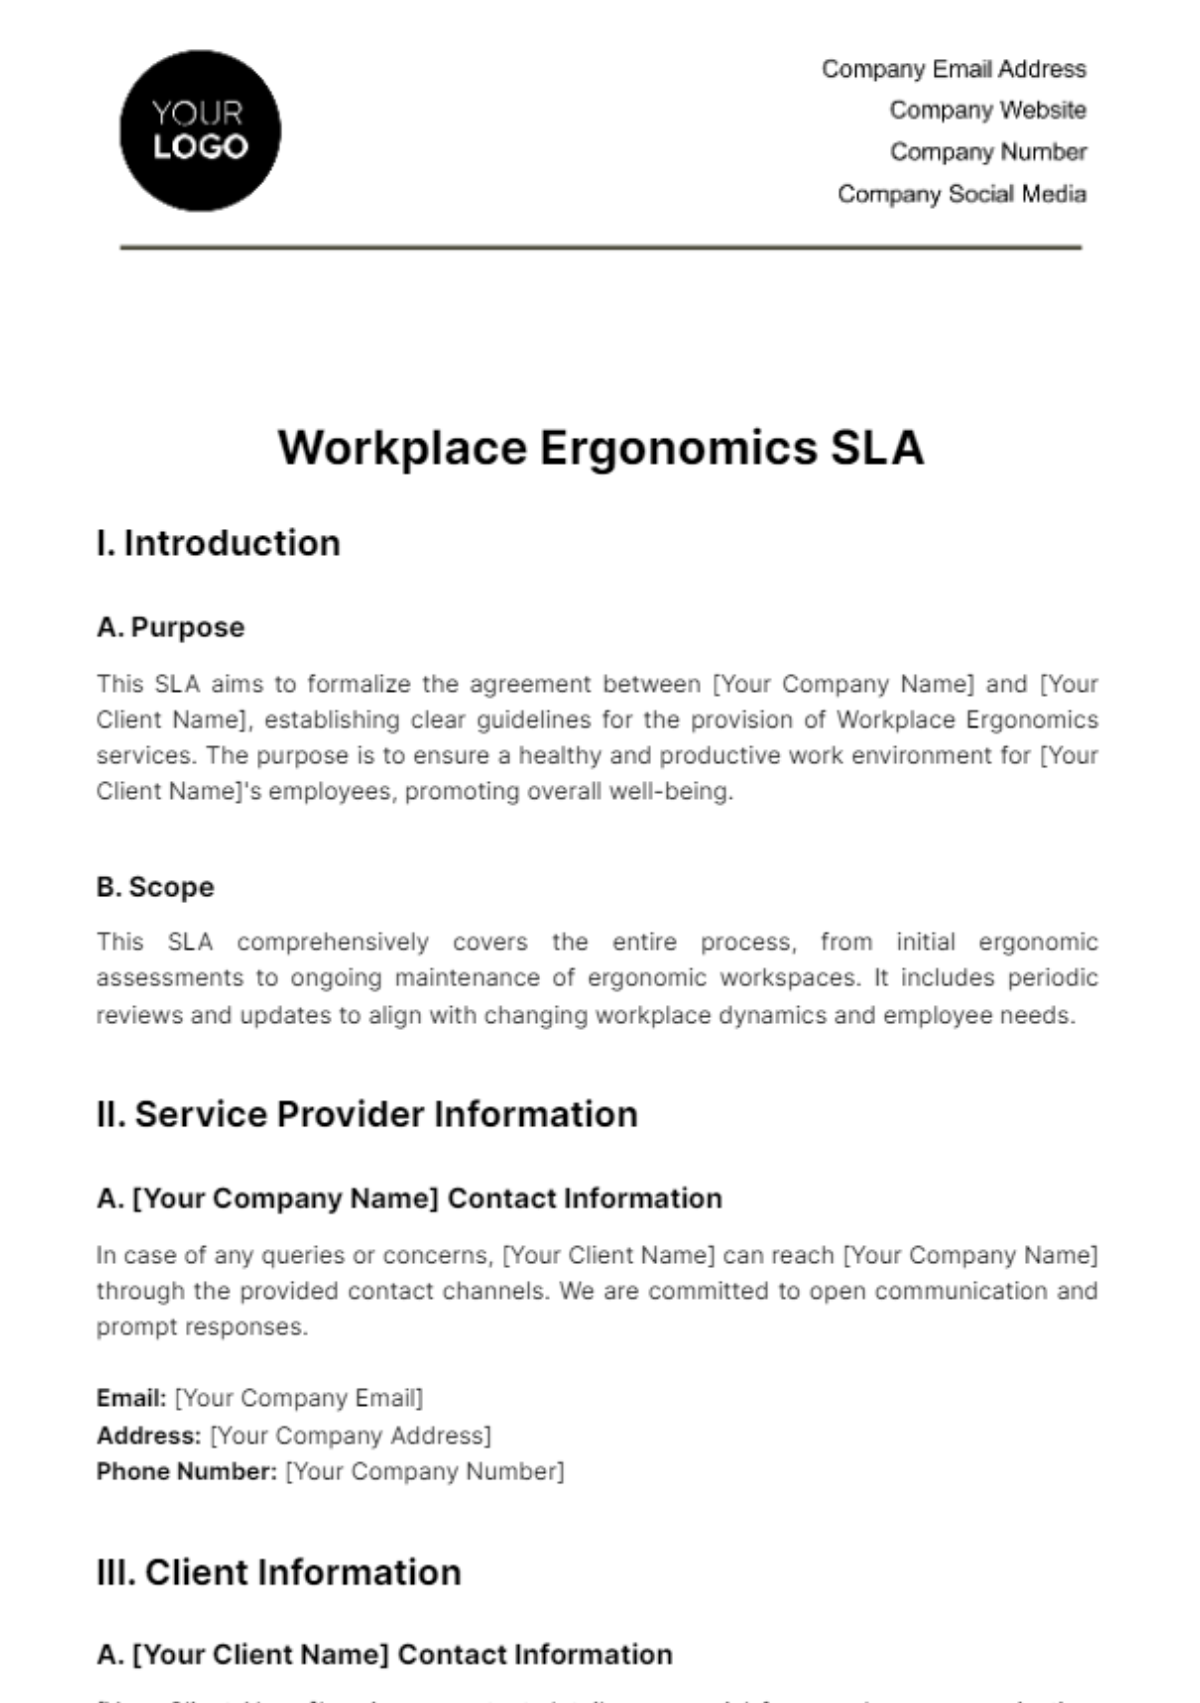 Workplace Ergonomics SLA Template